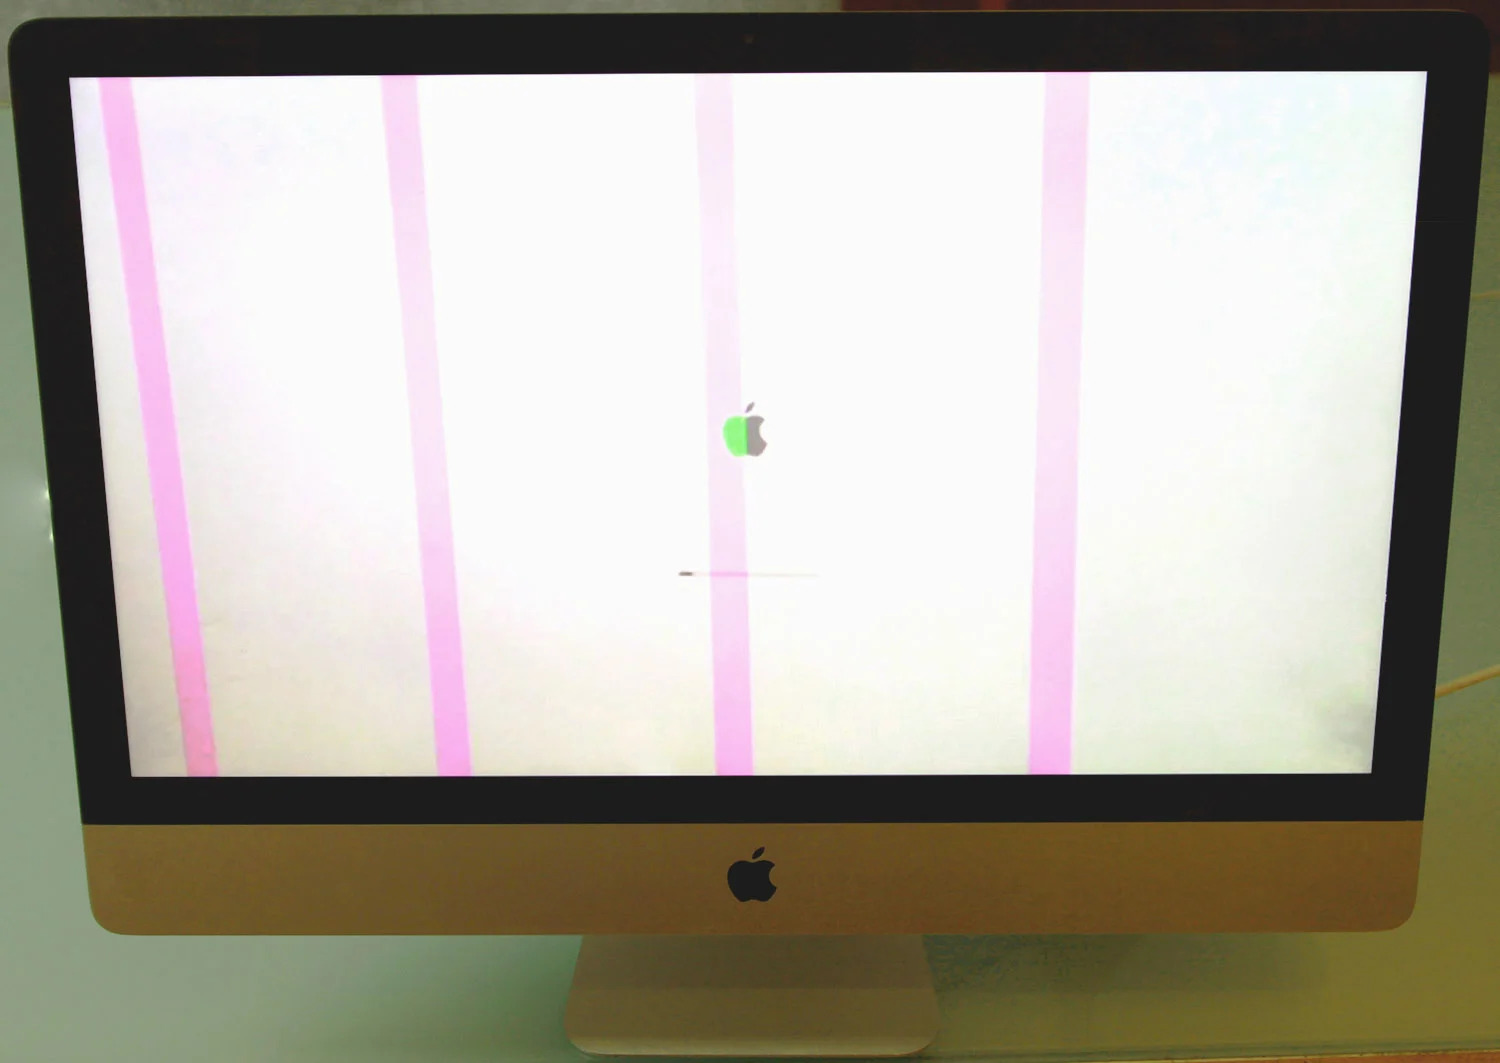 iMac graphic damage repair